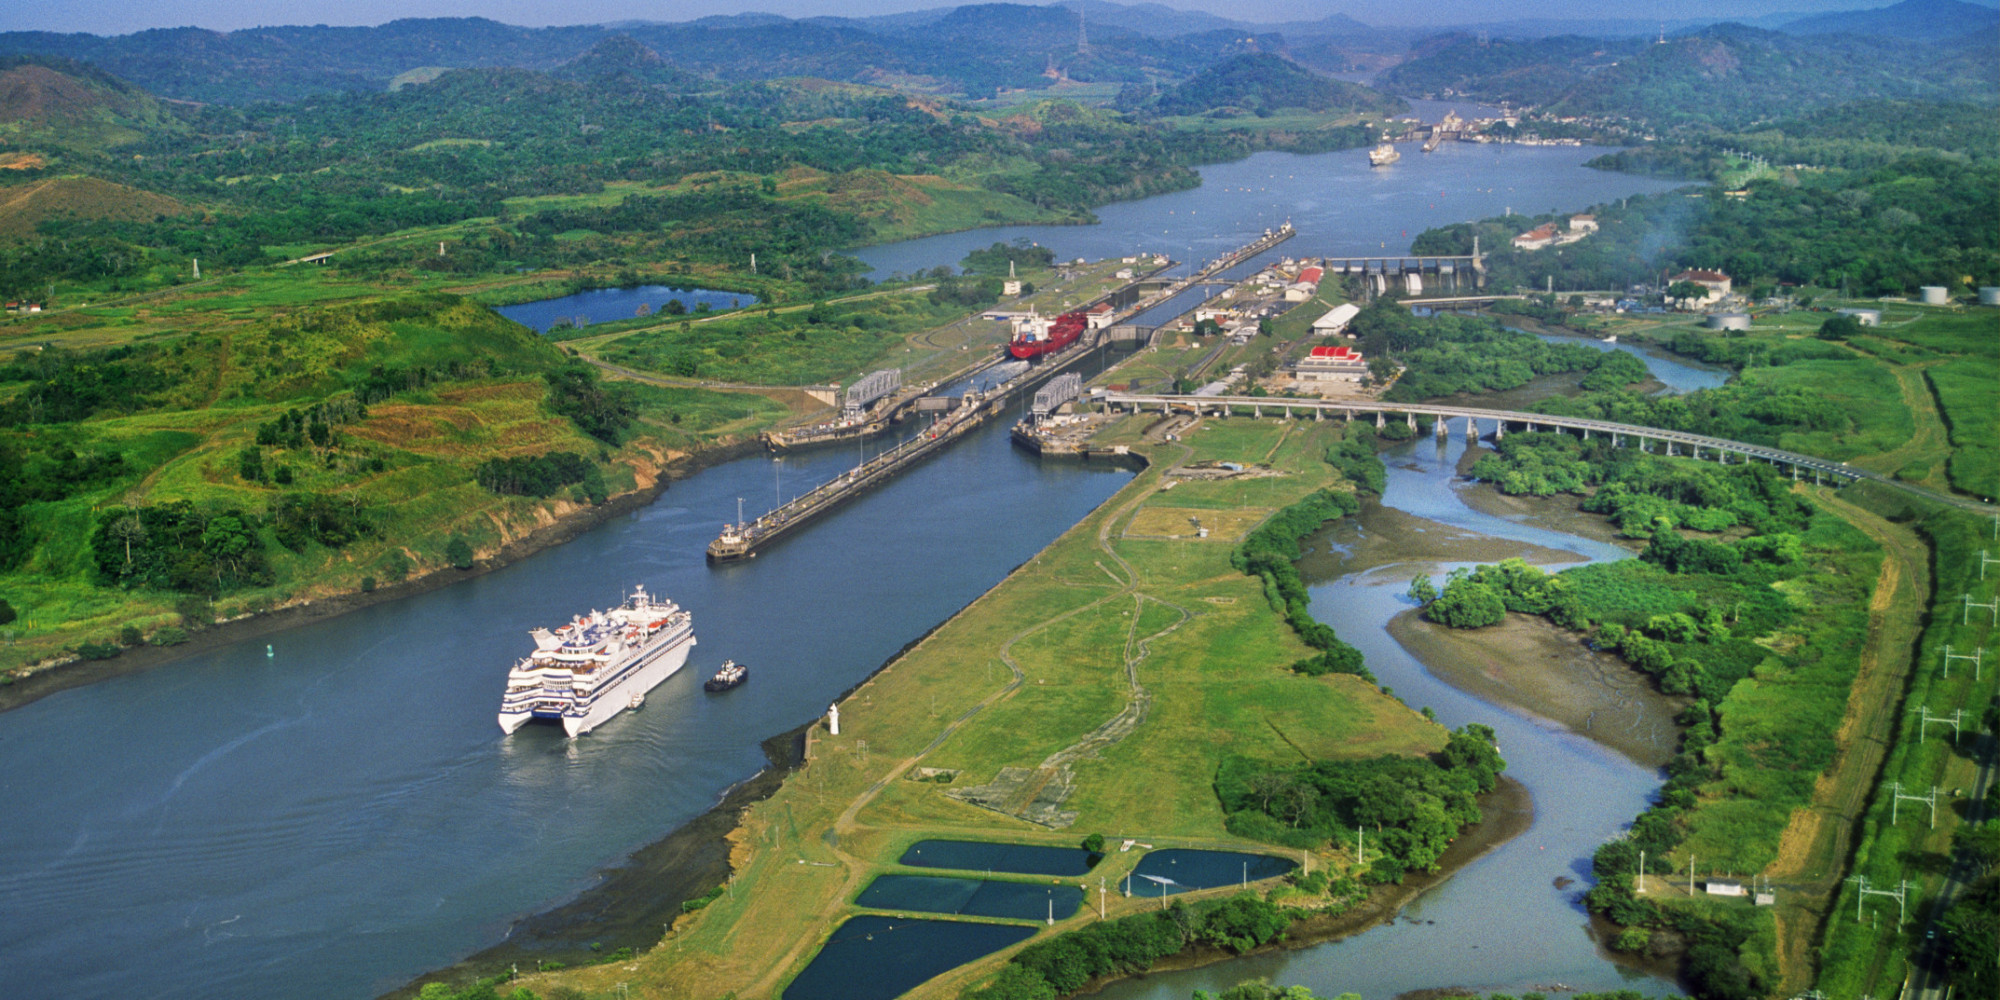 Explore Panama by Boat